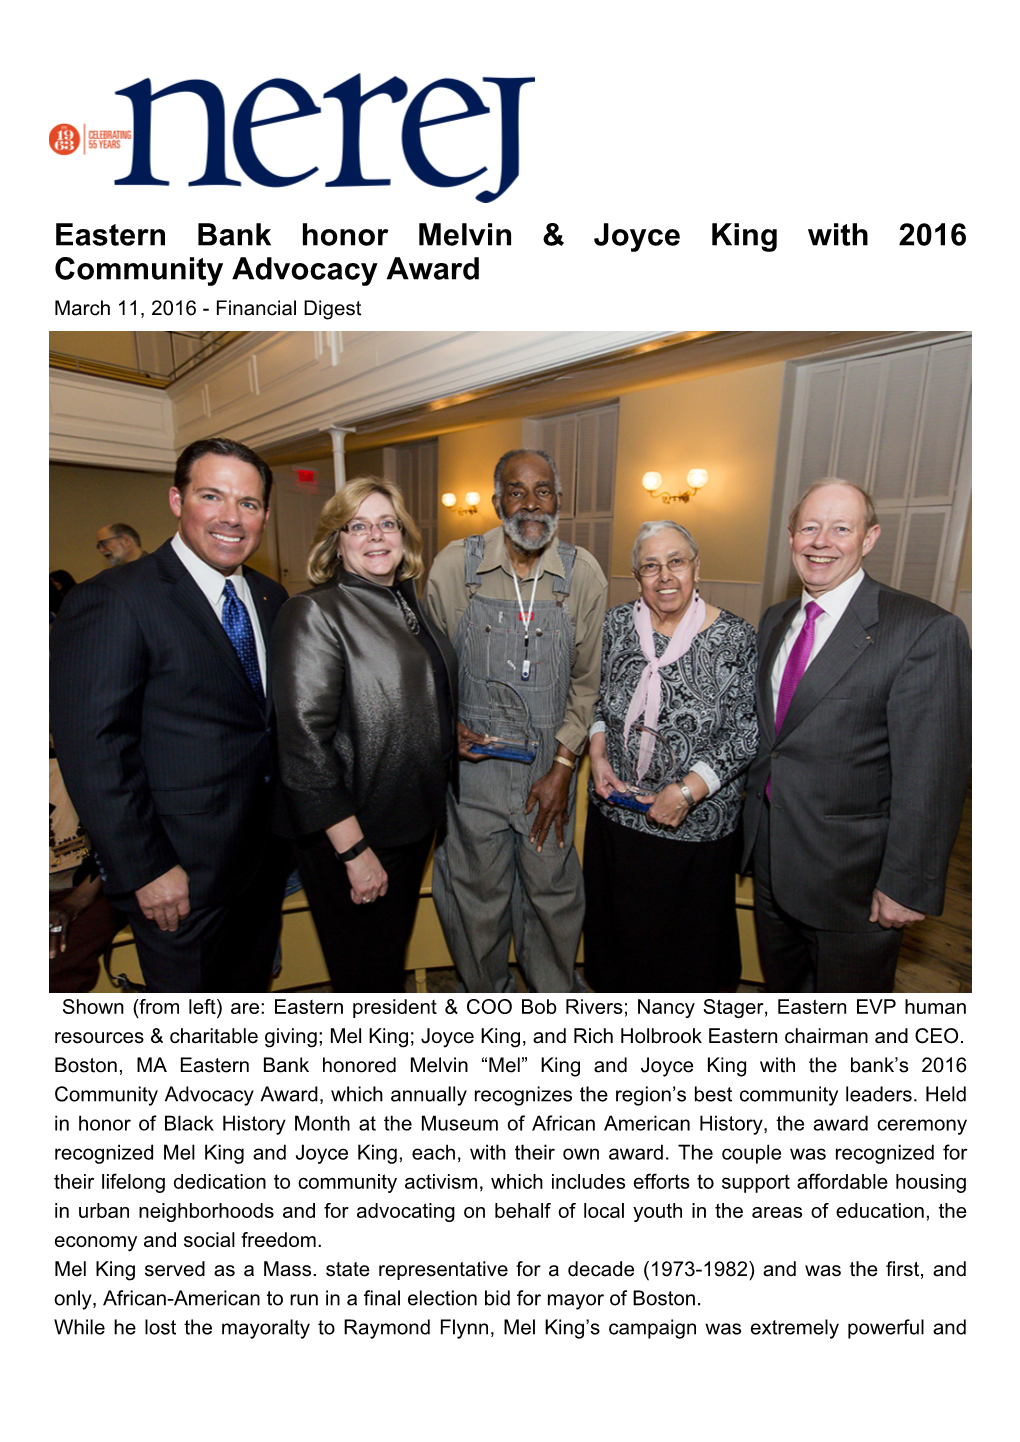 Eastern Bank Honor Melvin & Joyce King with 2016 Community